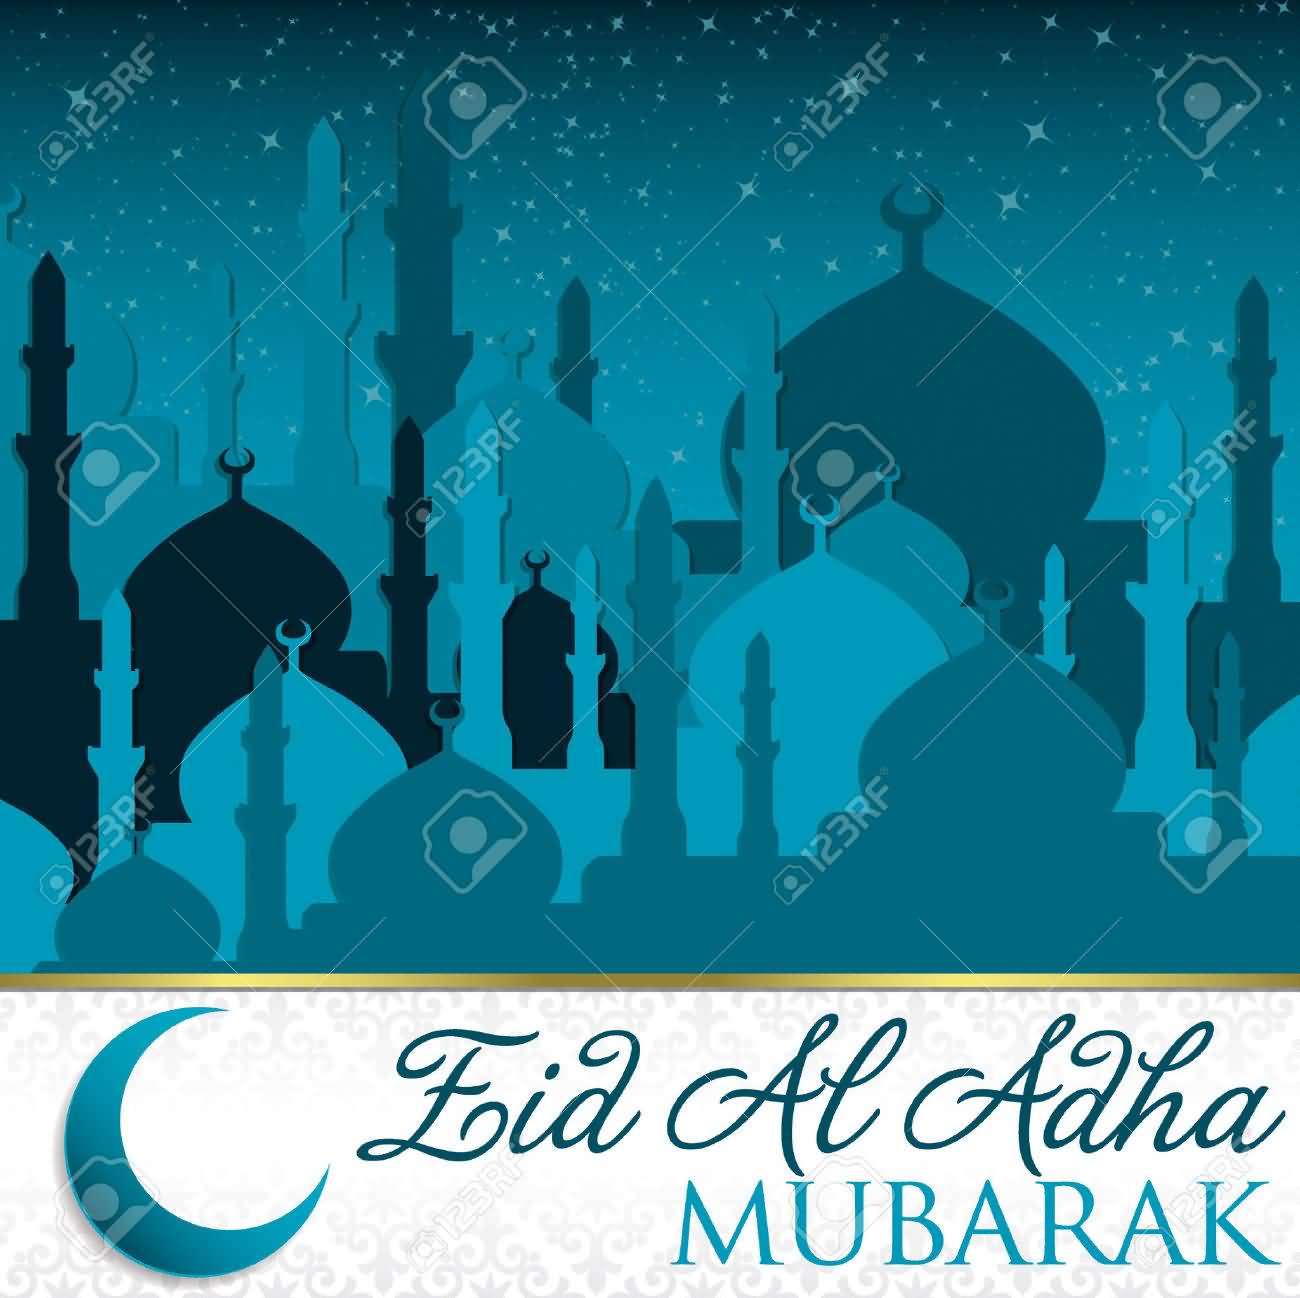 Wish You Happy Eid al-Adha